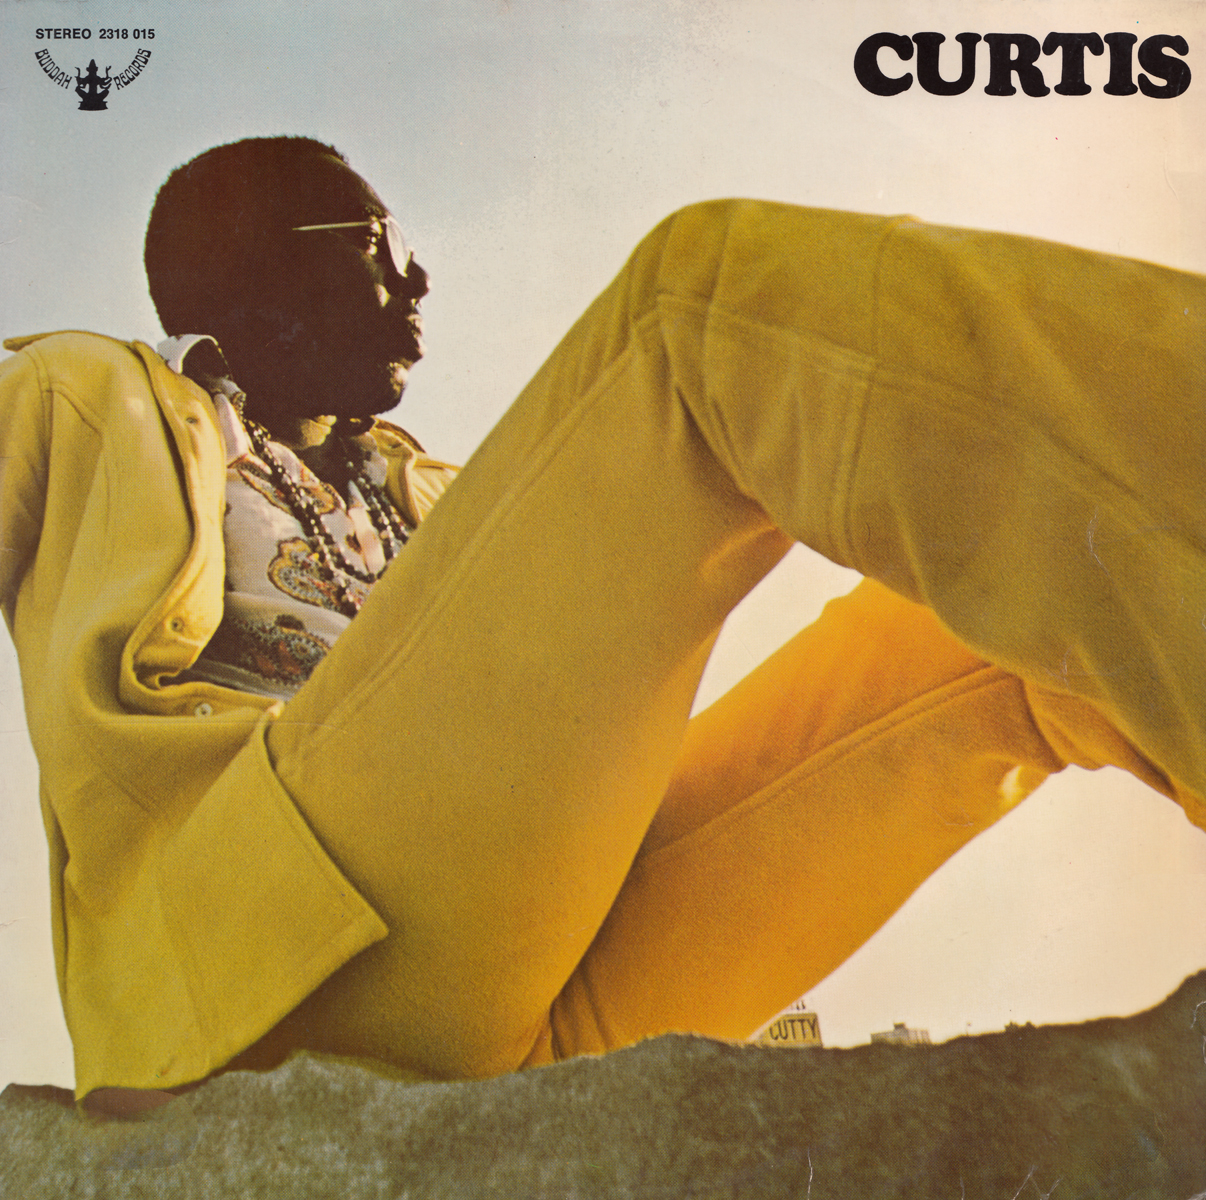 Curtis Mayfield "Curtis" CD